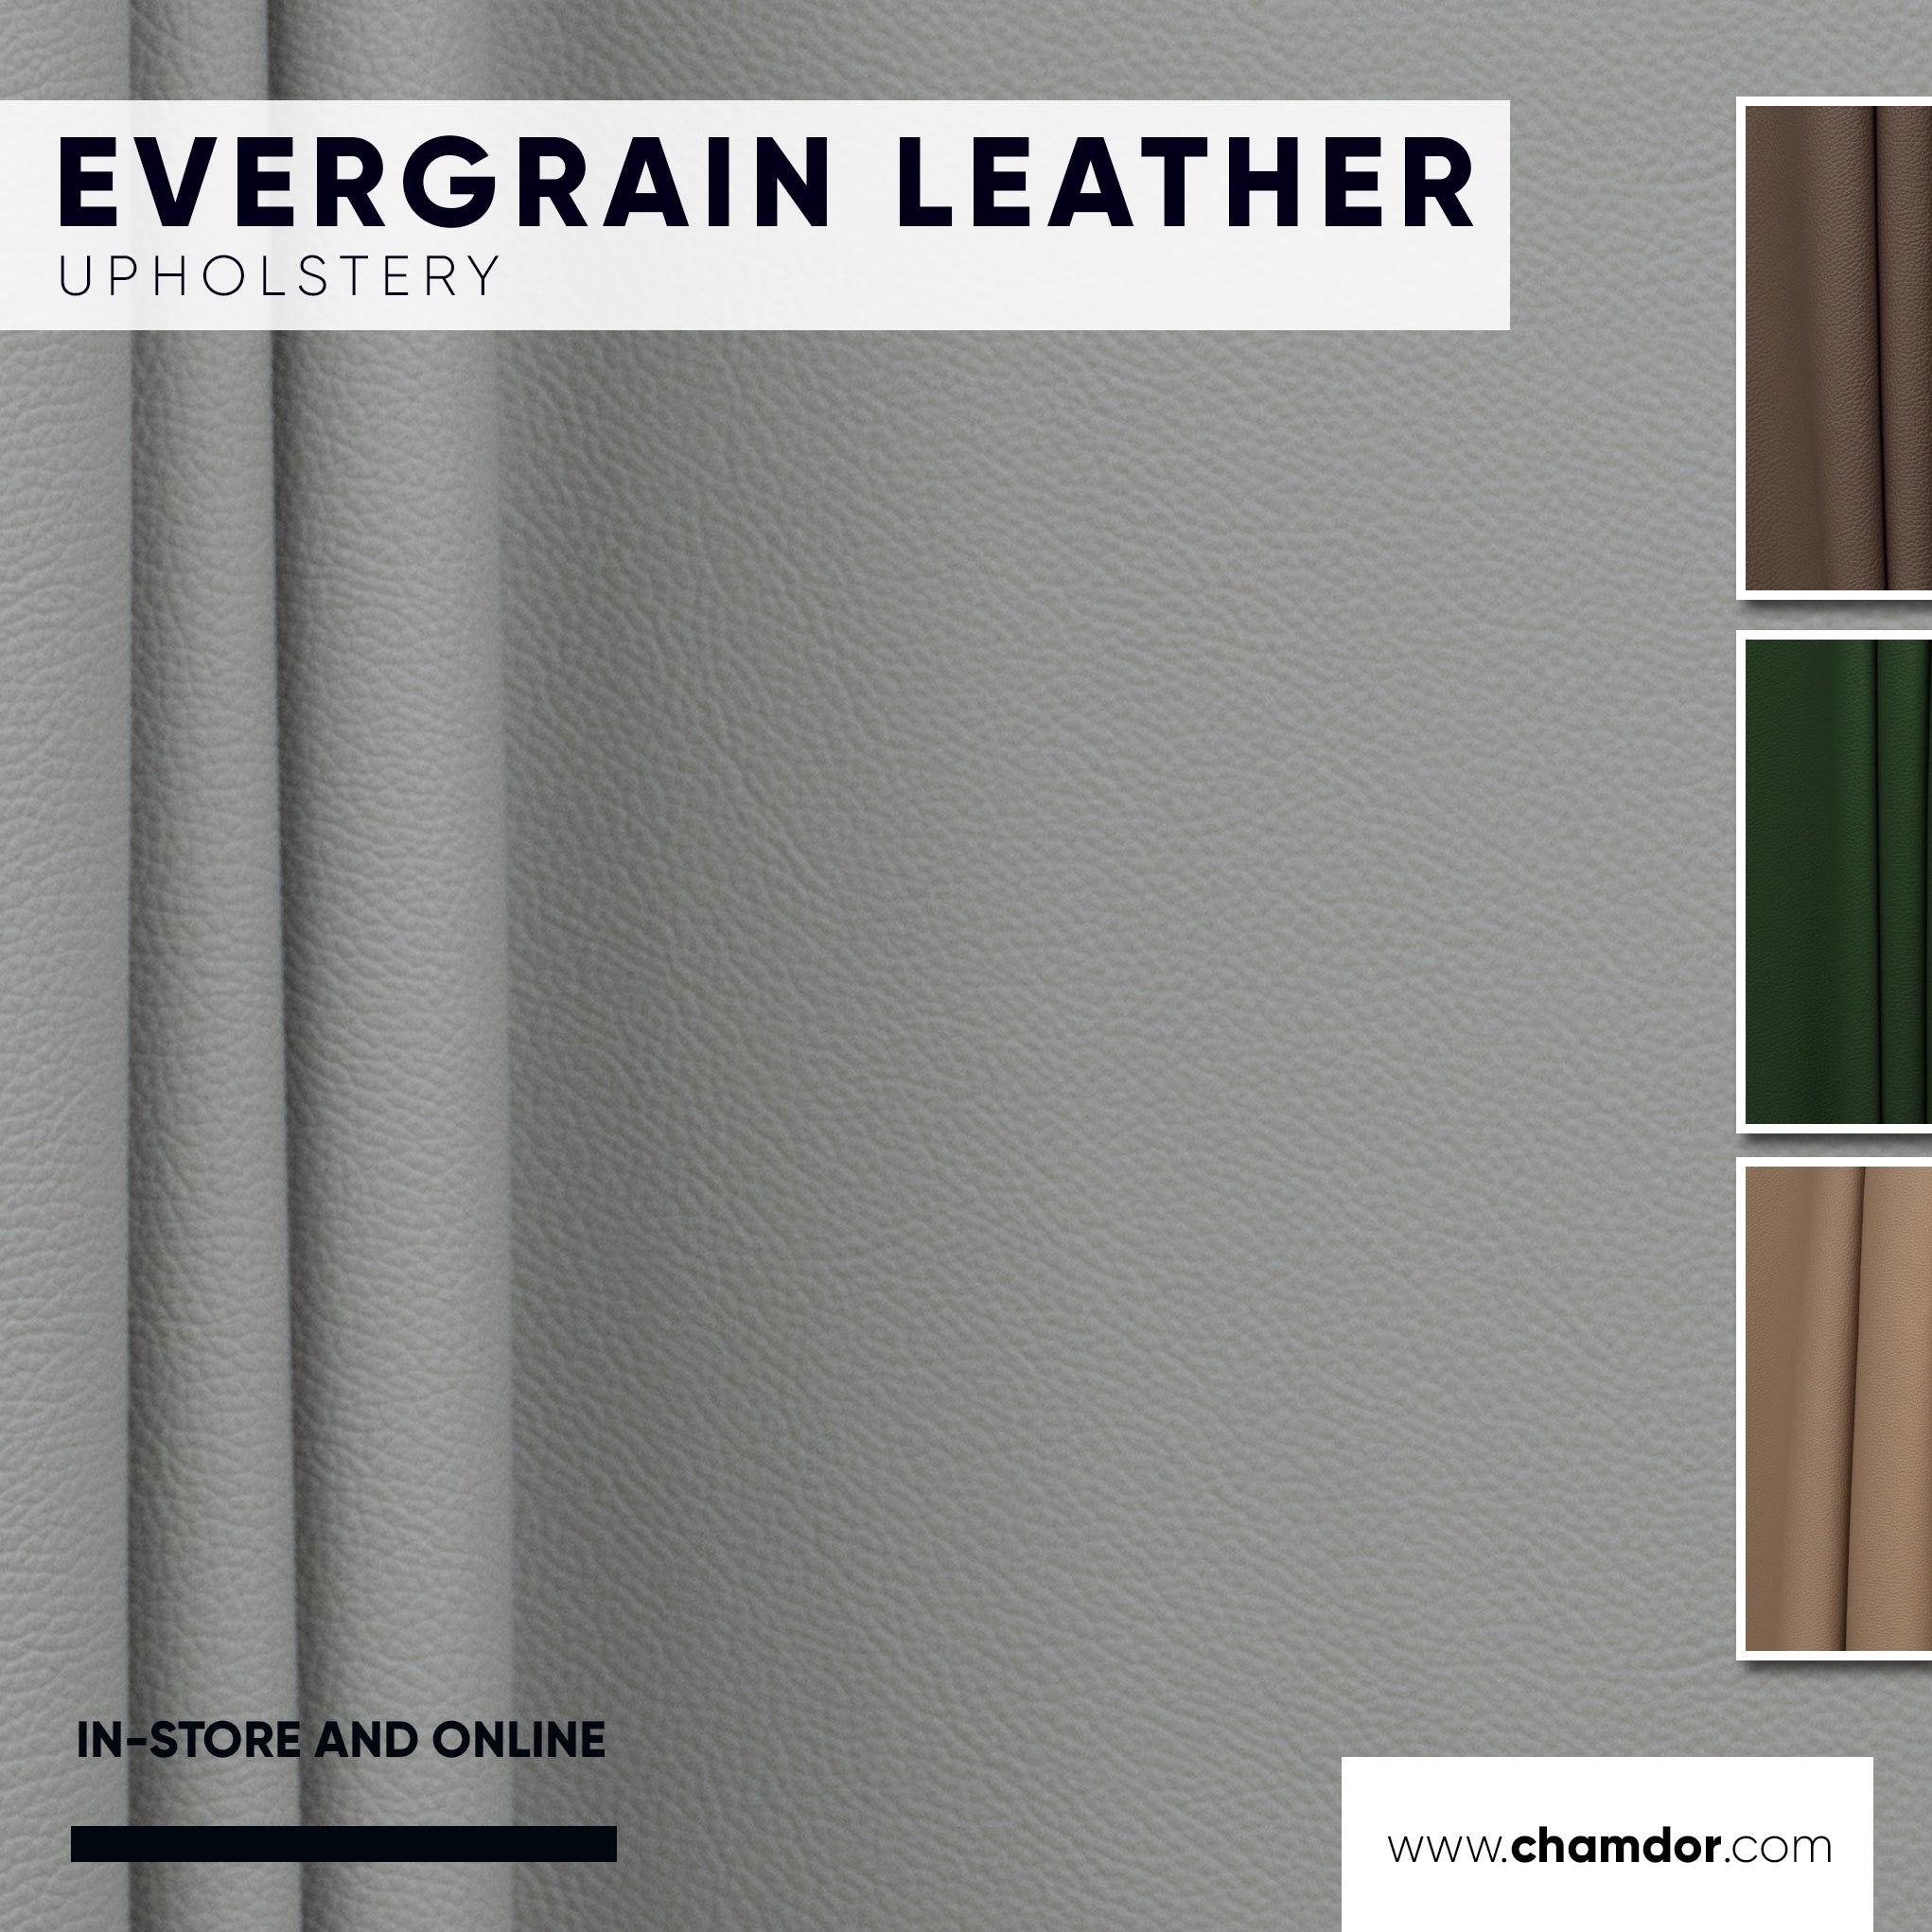 Evergrain leather